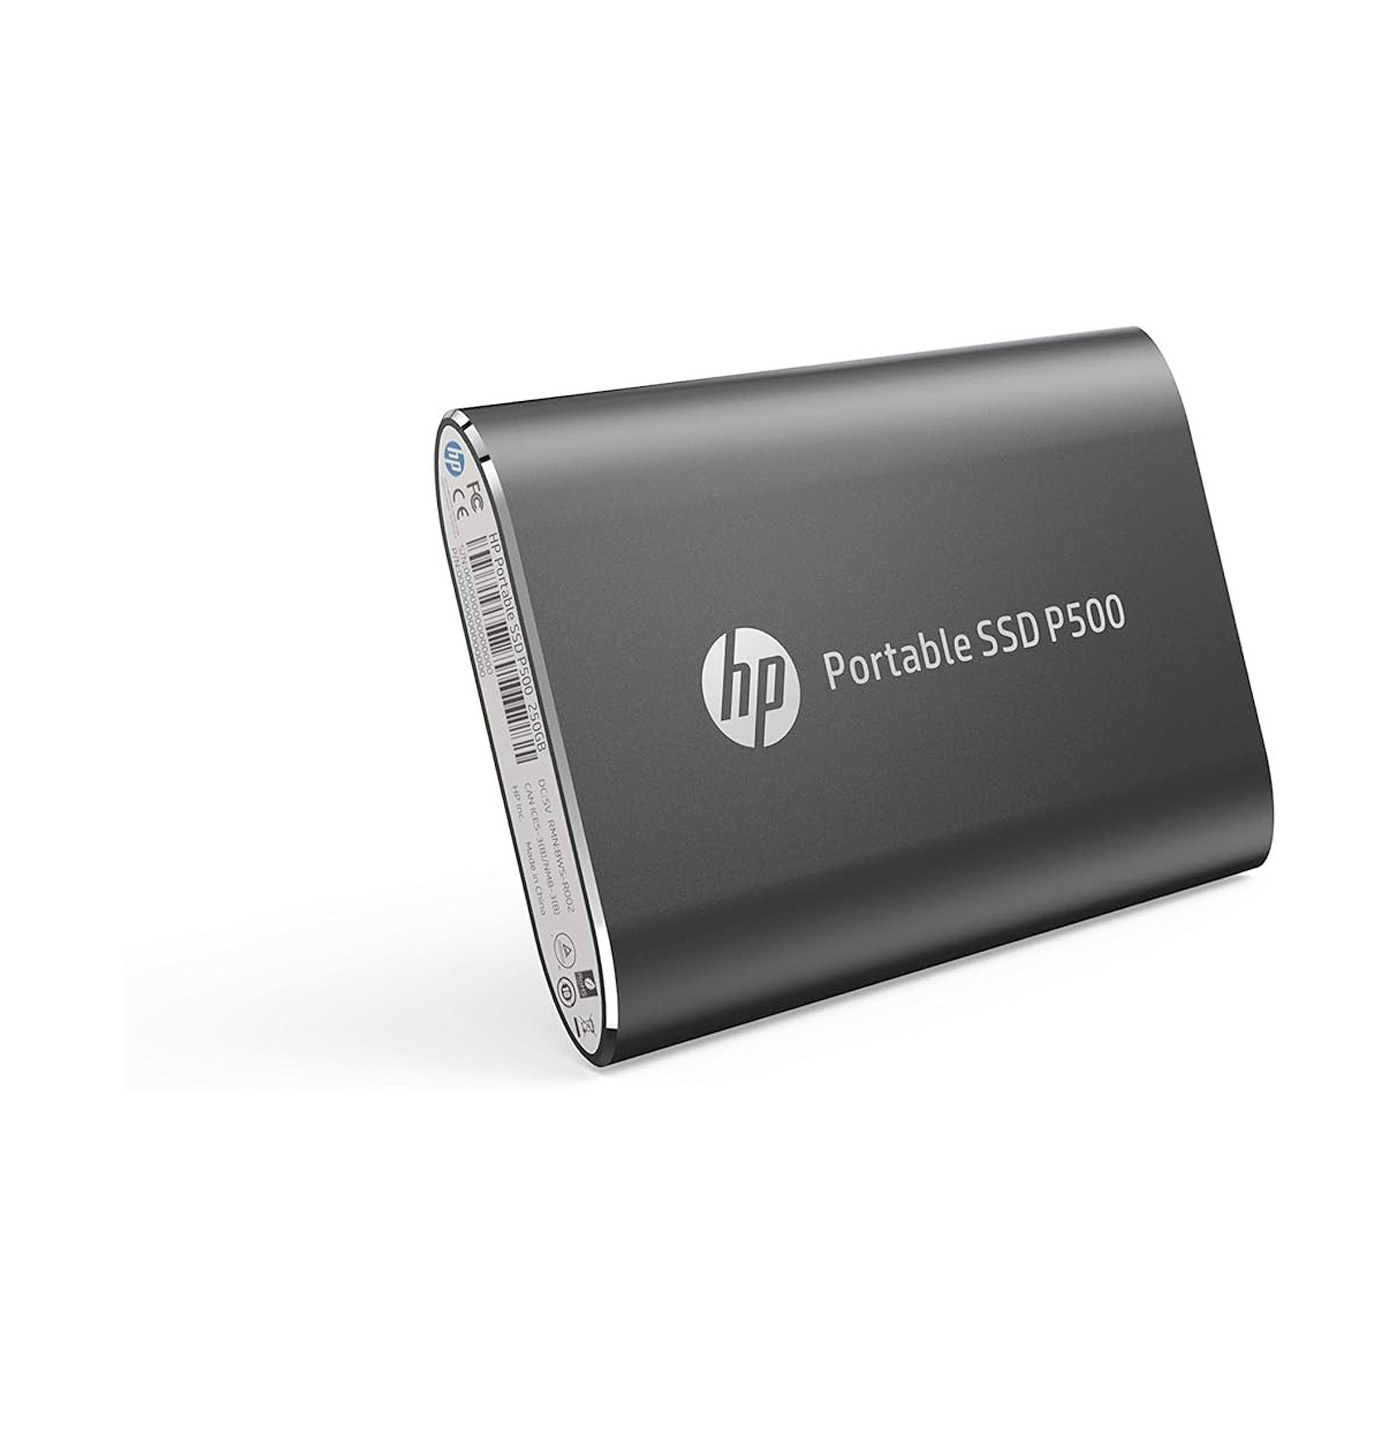 HP P500 Portable Type C 250GB